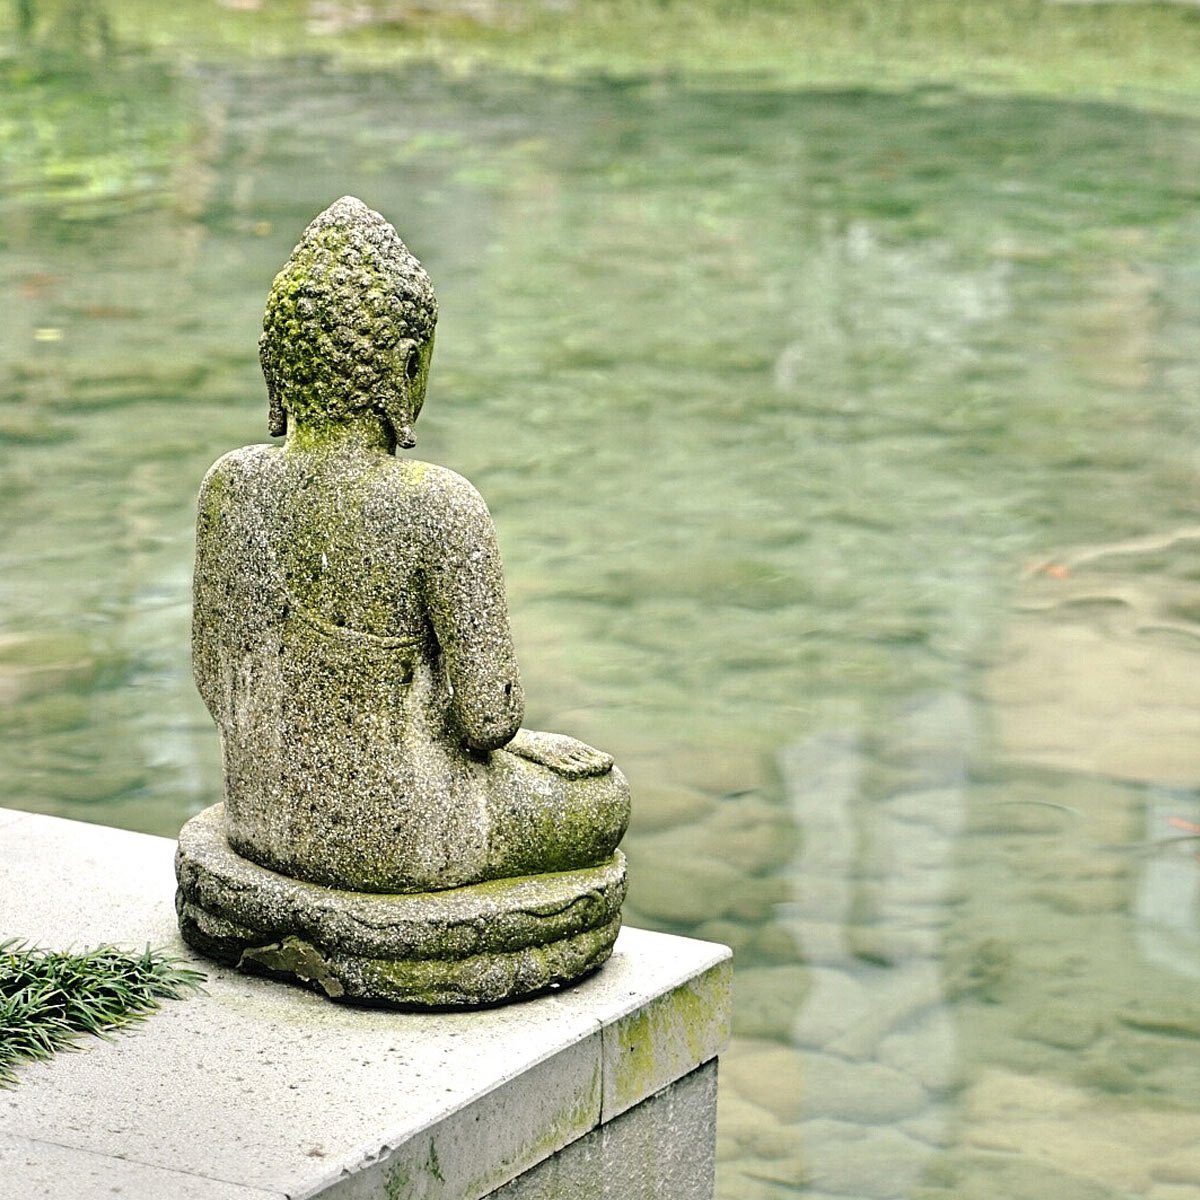 Buddha Statue by Water